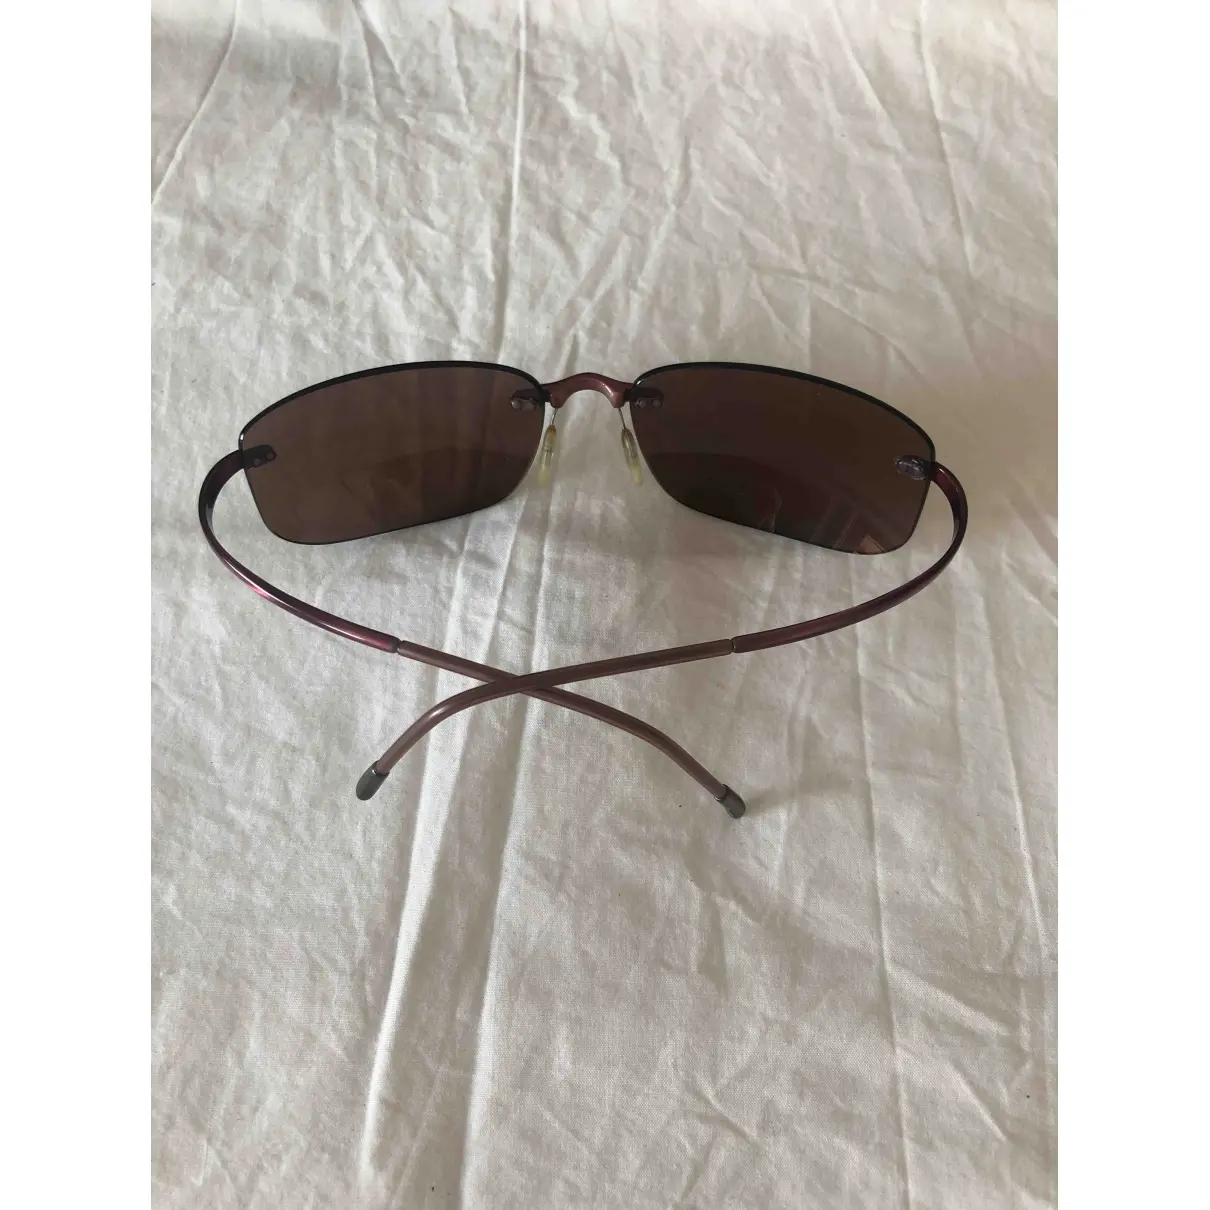 Buy Silhouette Sunglasses online